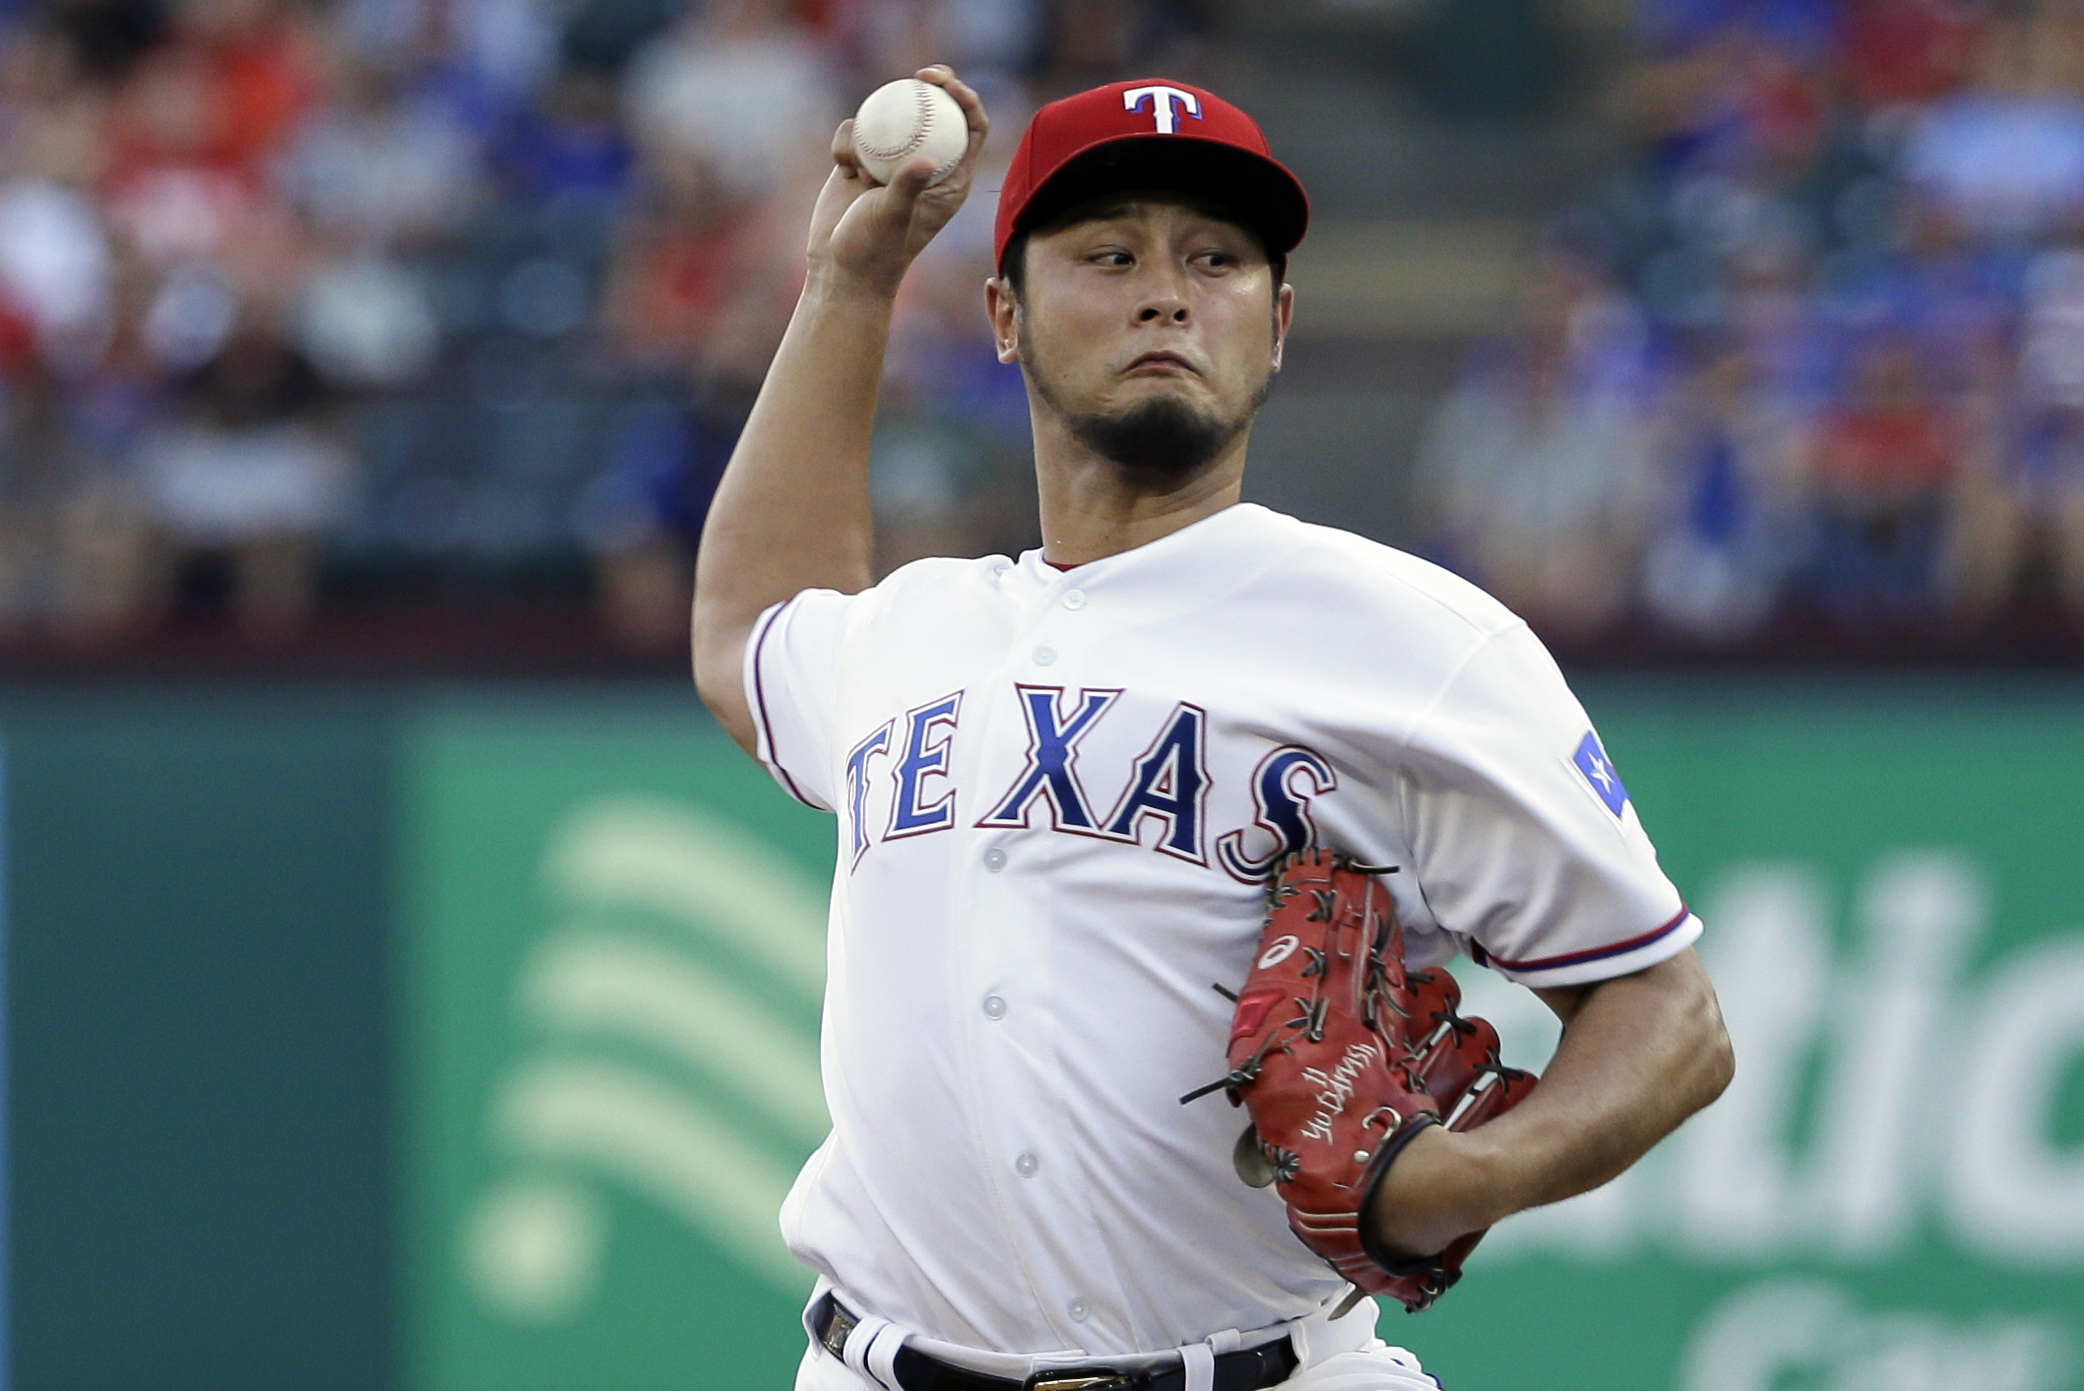 Baseball: Darvish savoring All-Star experience as trade rumors swirl